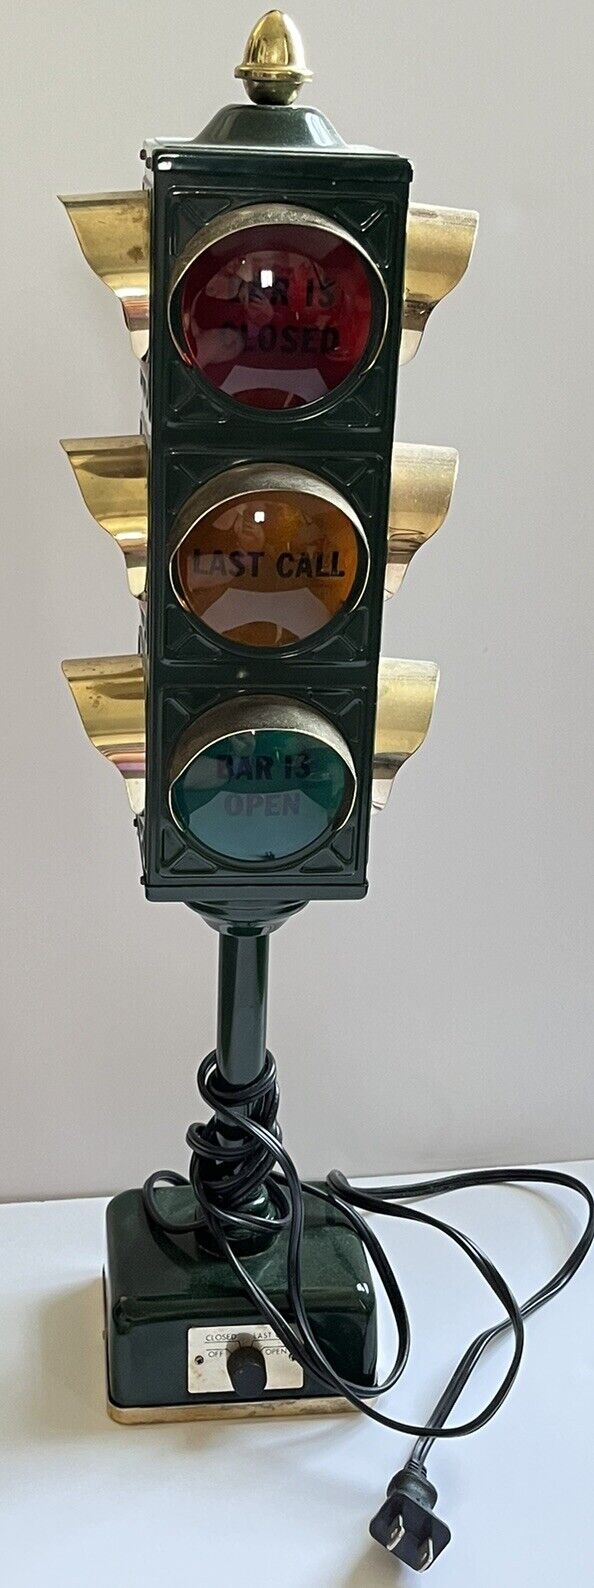 VTG 1960s B&B Bar Lamp Stop Light Traffic Signal OPEN CLOSED LAST CALL MAN CAVE